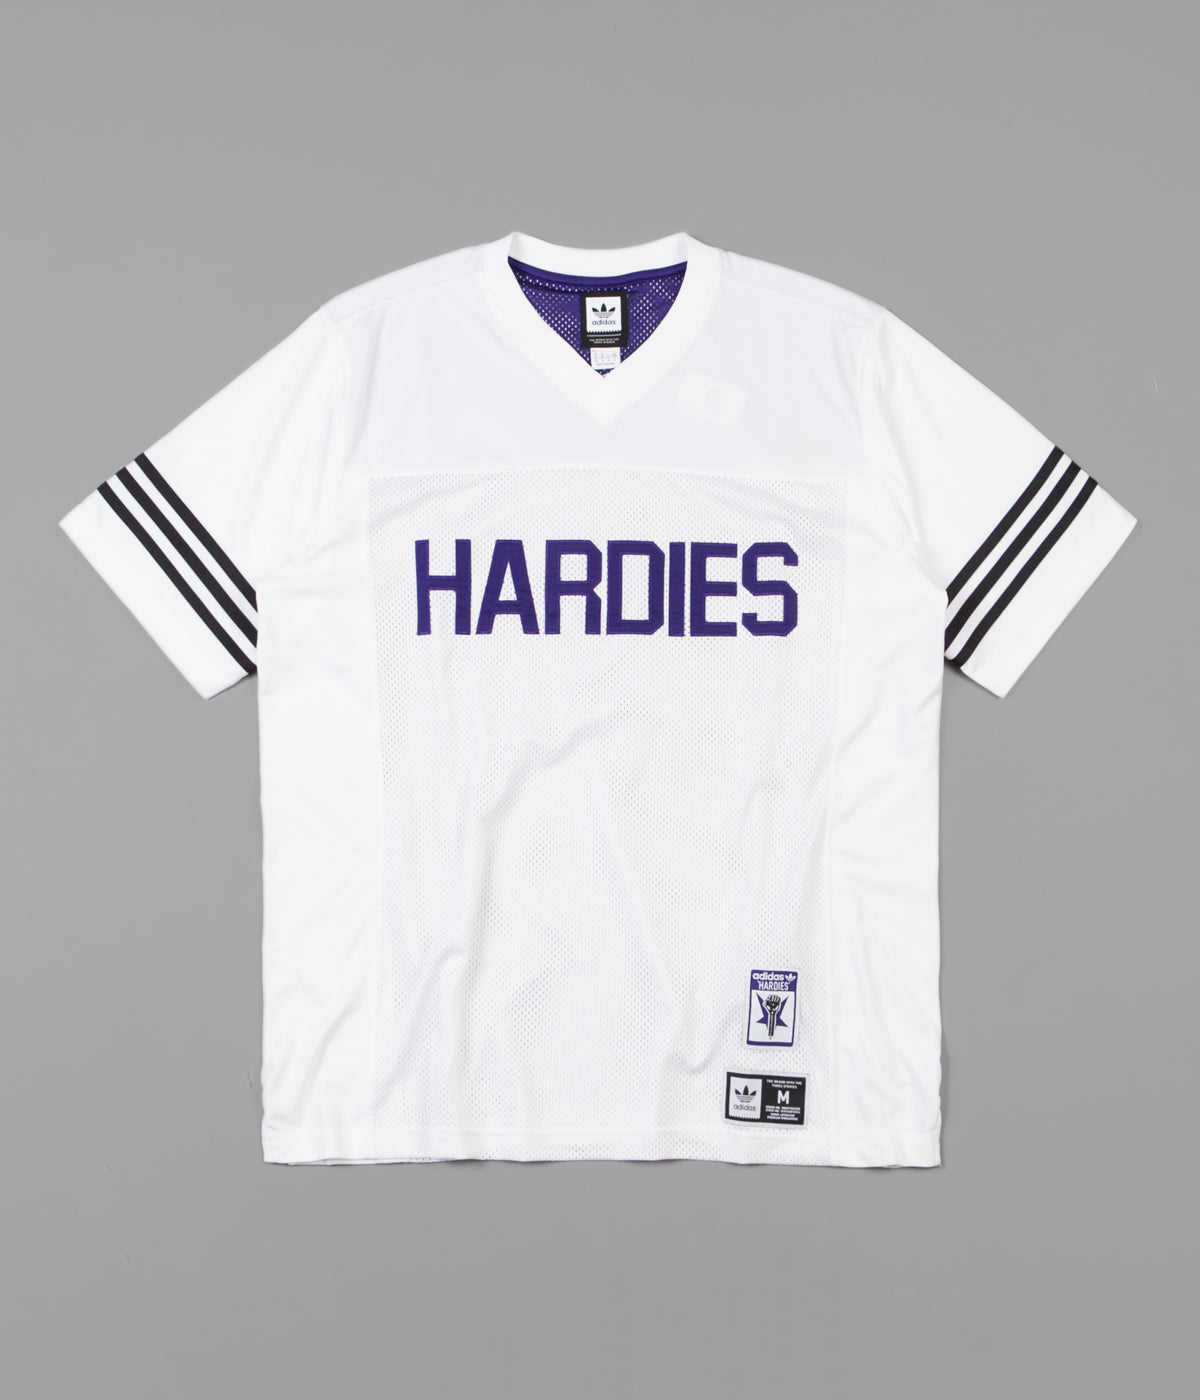 hardies jersey